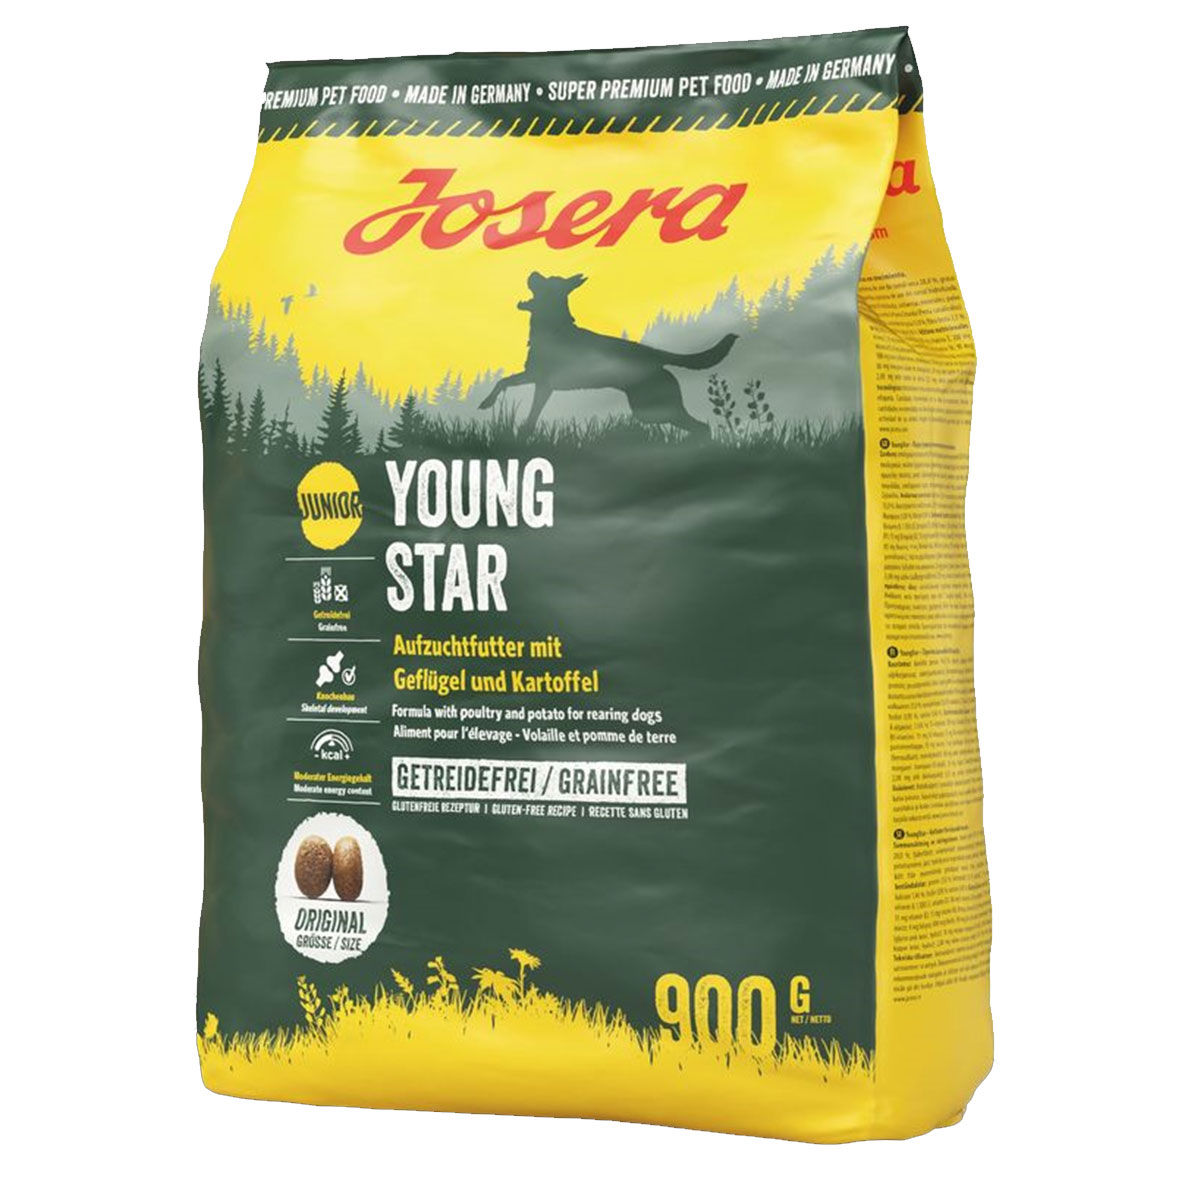 Josera Young Star 900 g